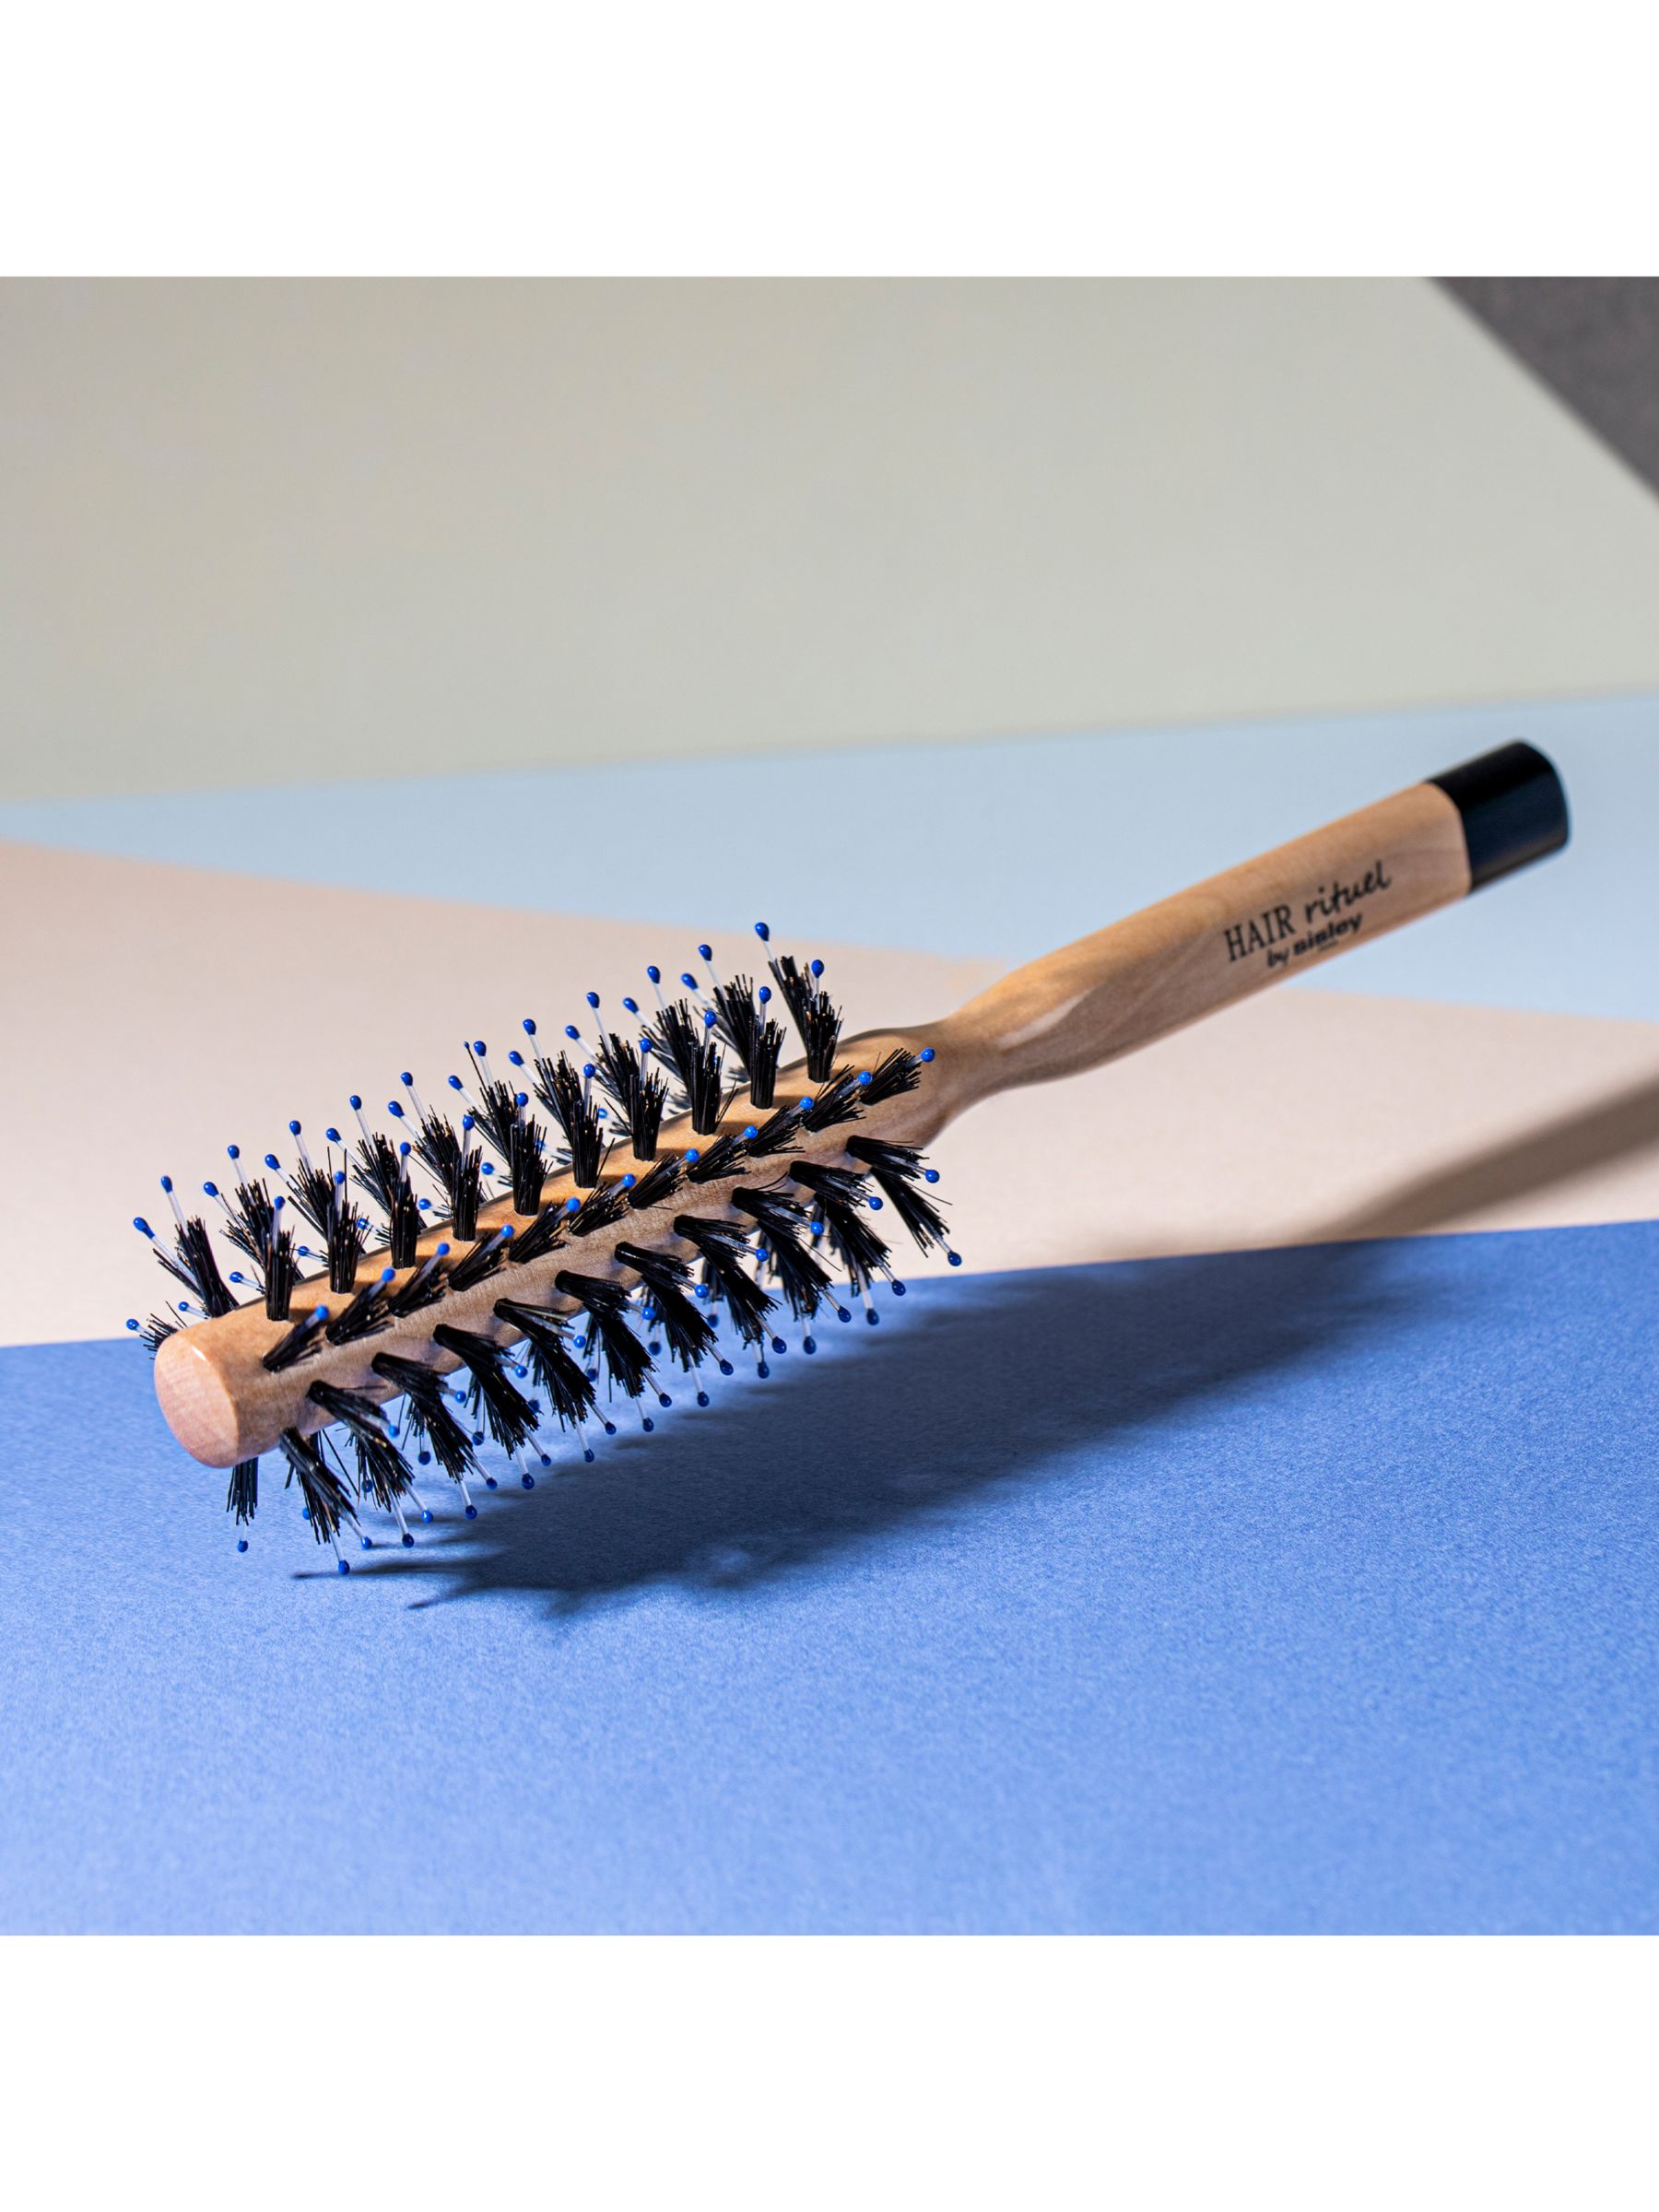 Sisley-Paris Hair Rituel Brush, Curly/Thick Hair